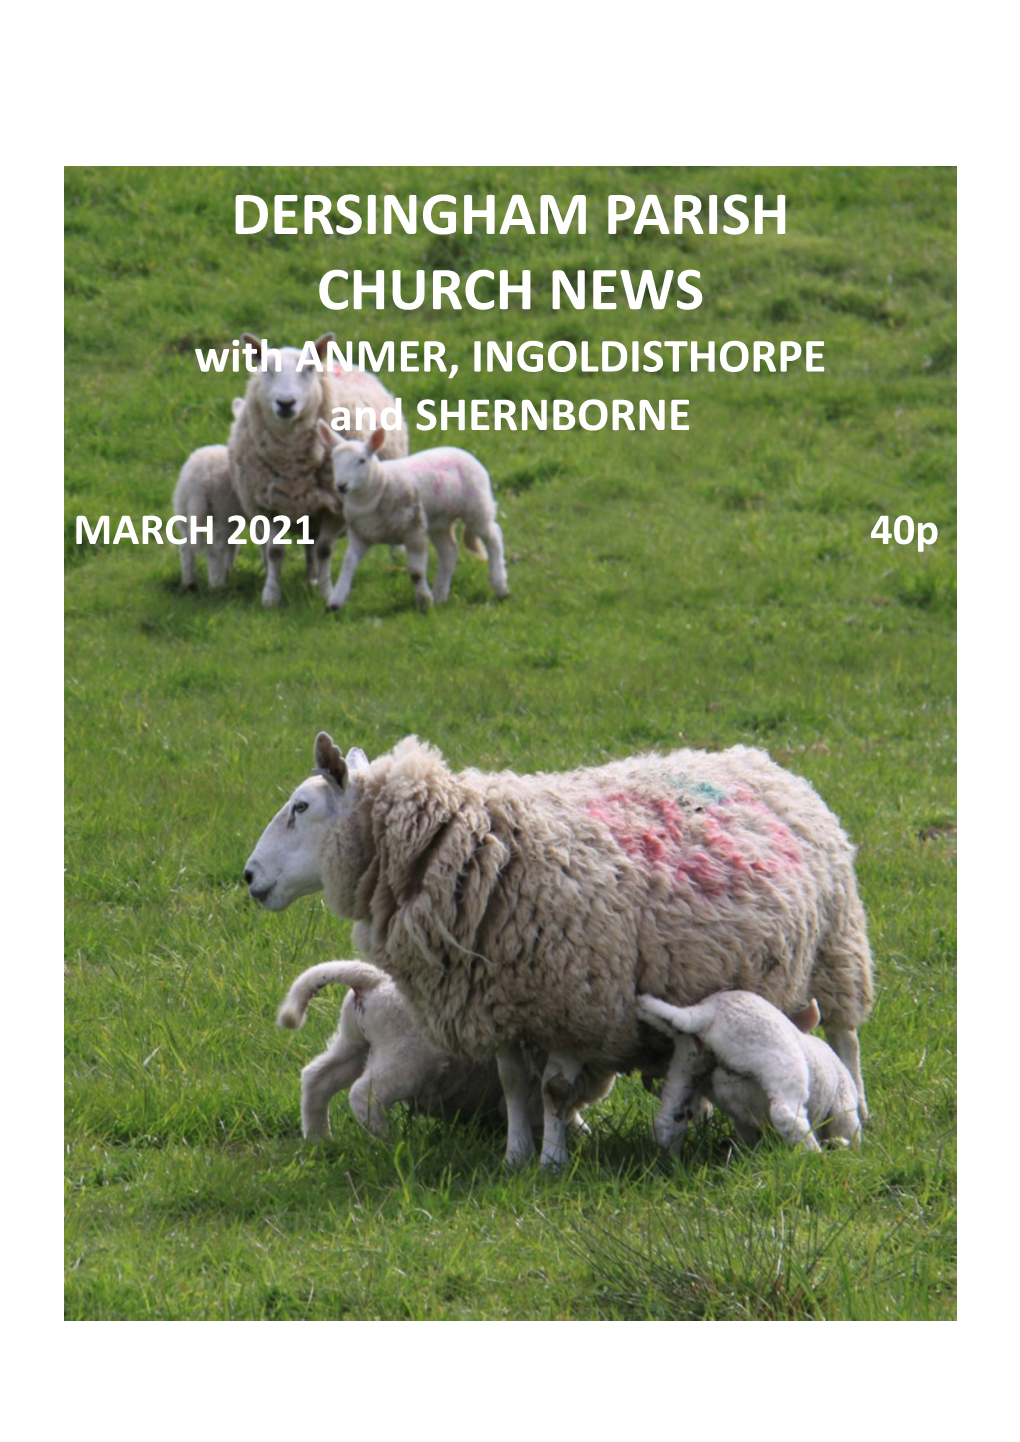 DERSINGHAM PARISH CHURCH NEWS with ANMER, INGOLDISTHORPE and SHERNBORNE